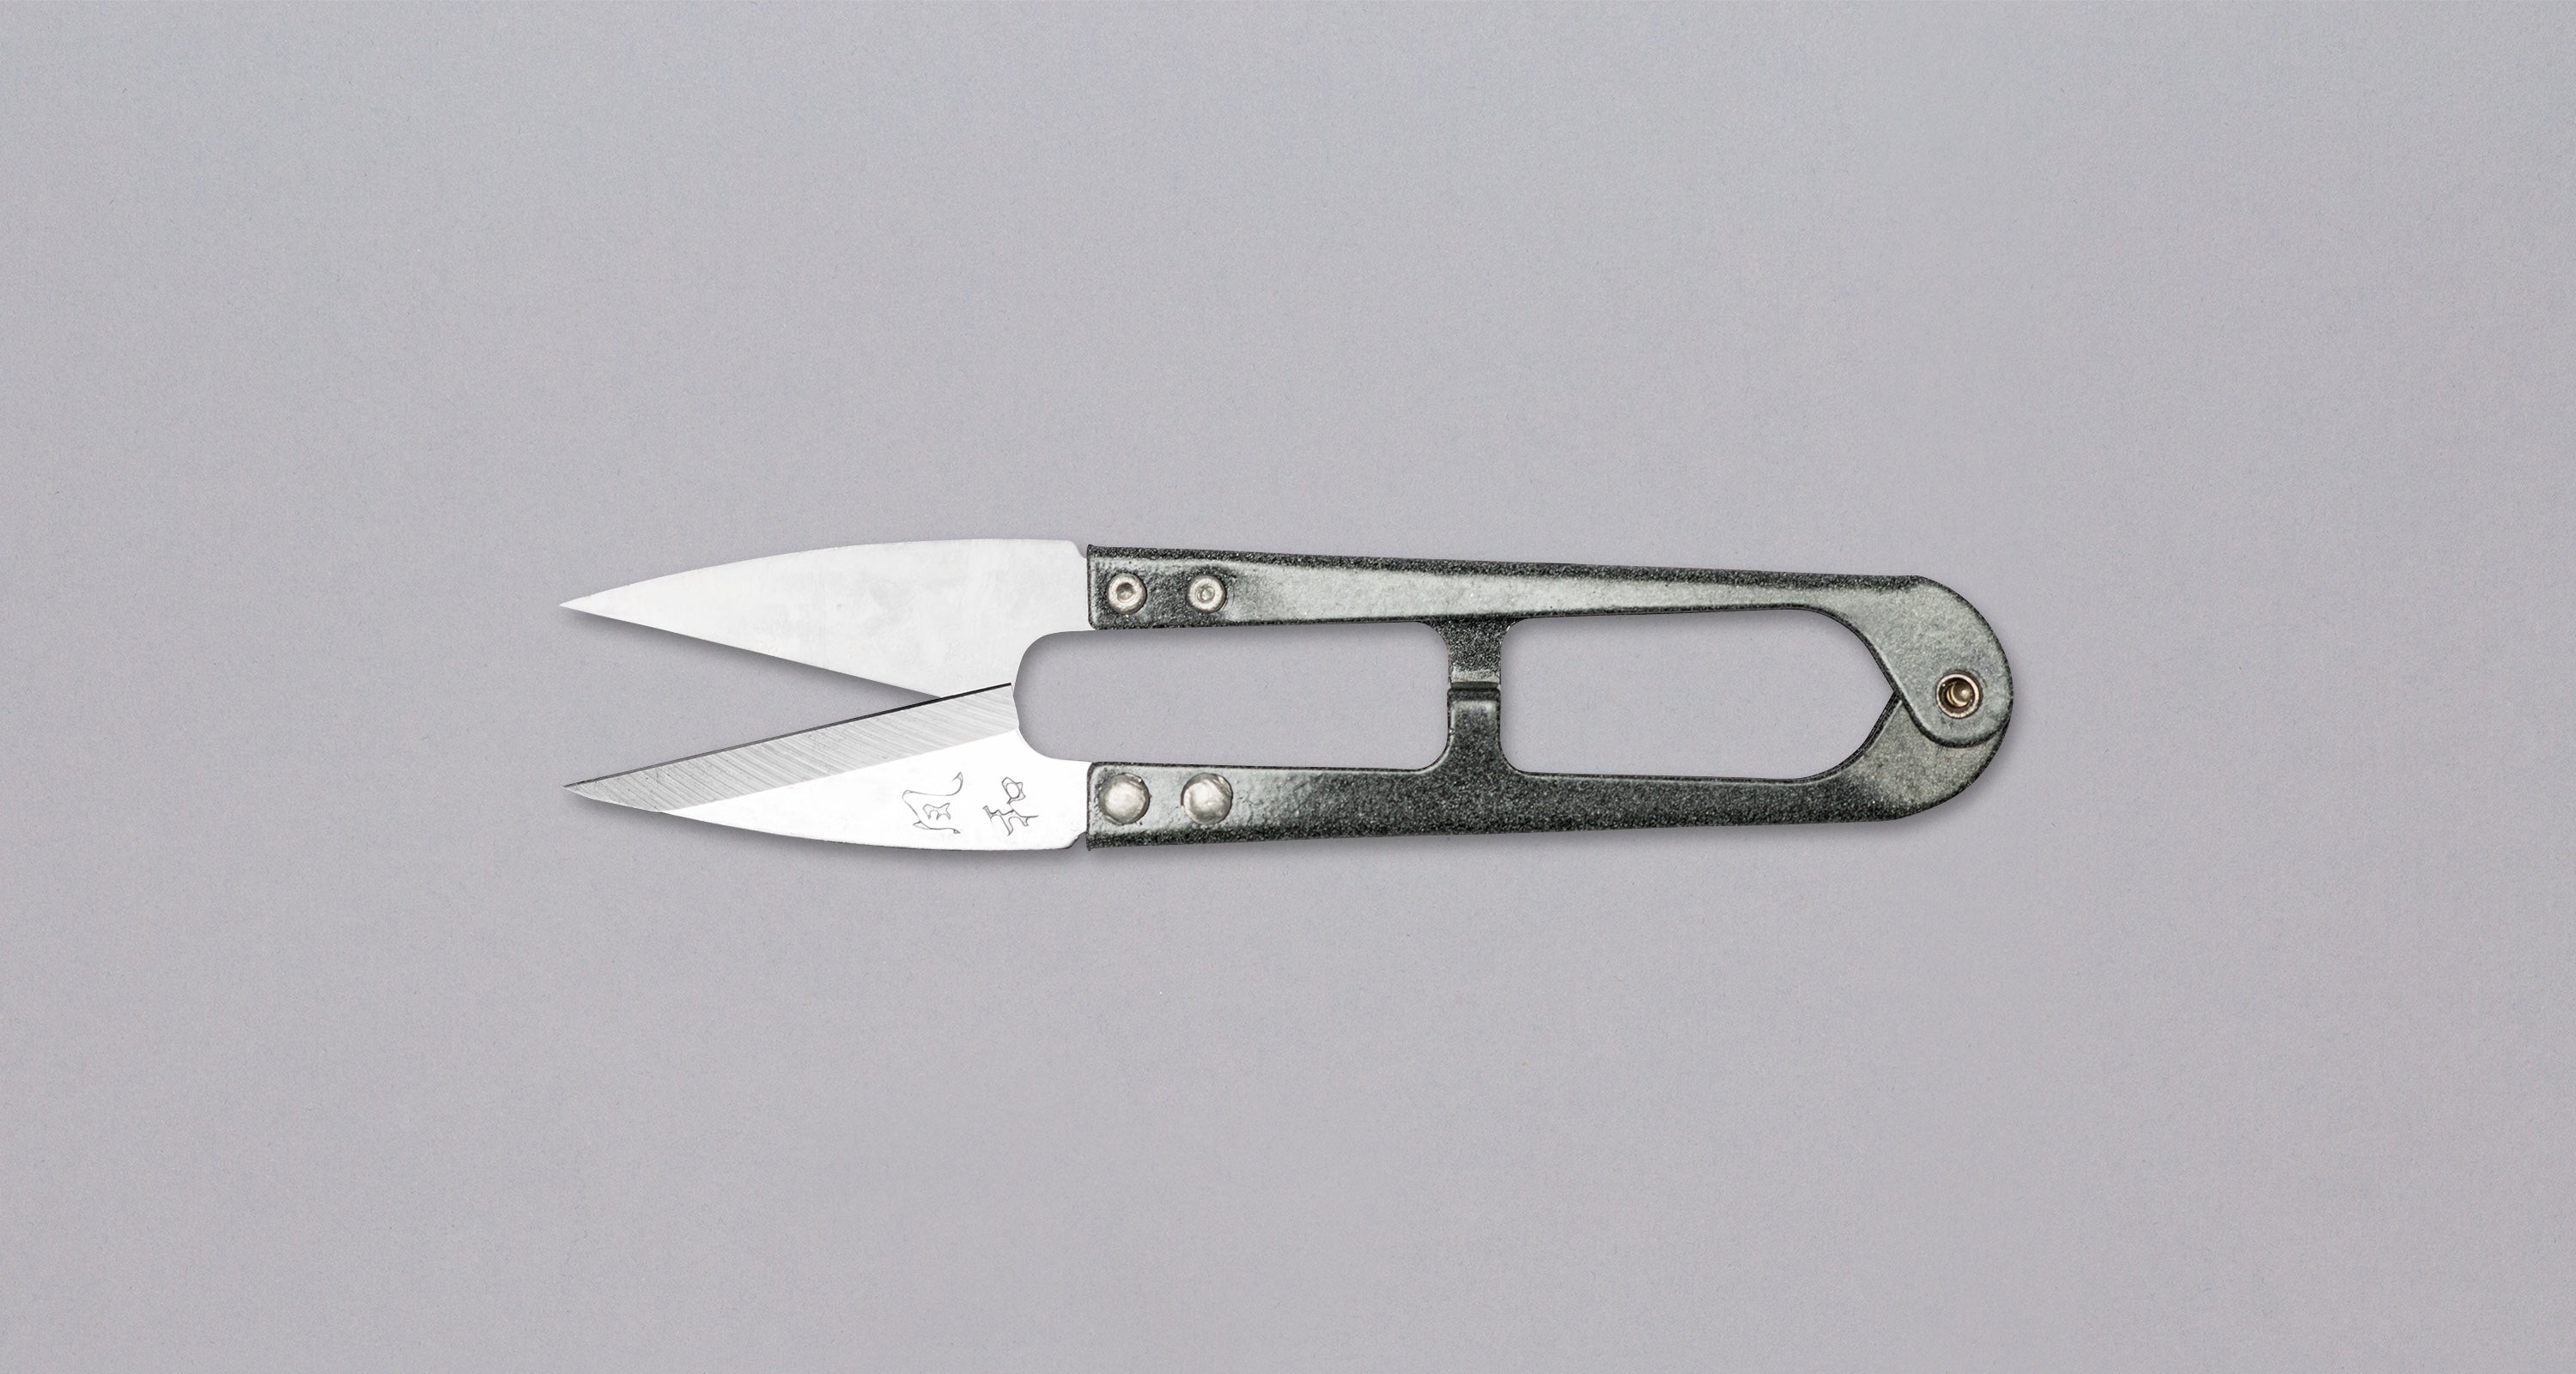 Small Scissors with Lacquered Handles (Shunuri) (45-140)